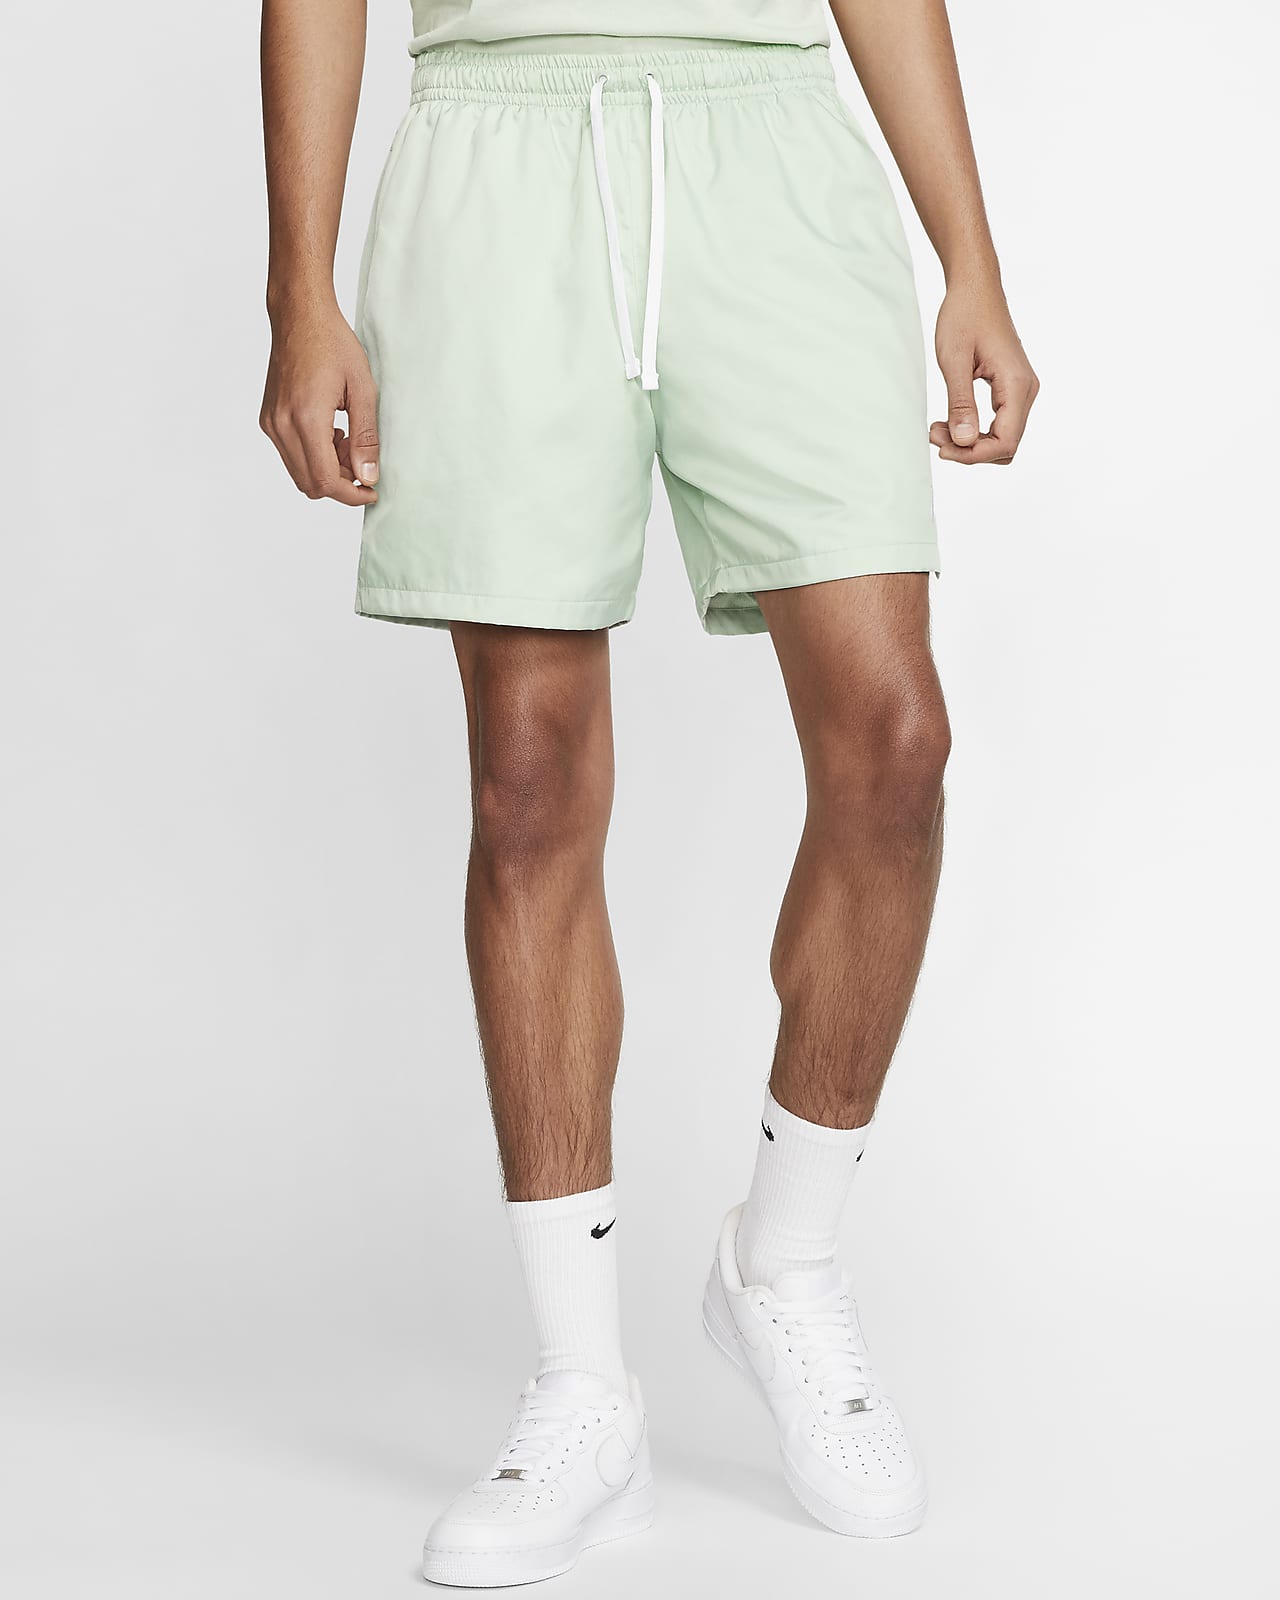 nike woven logo shorts